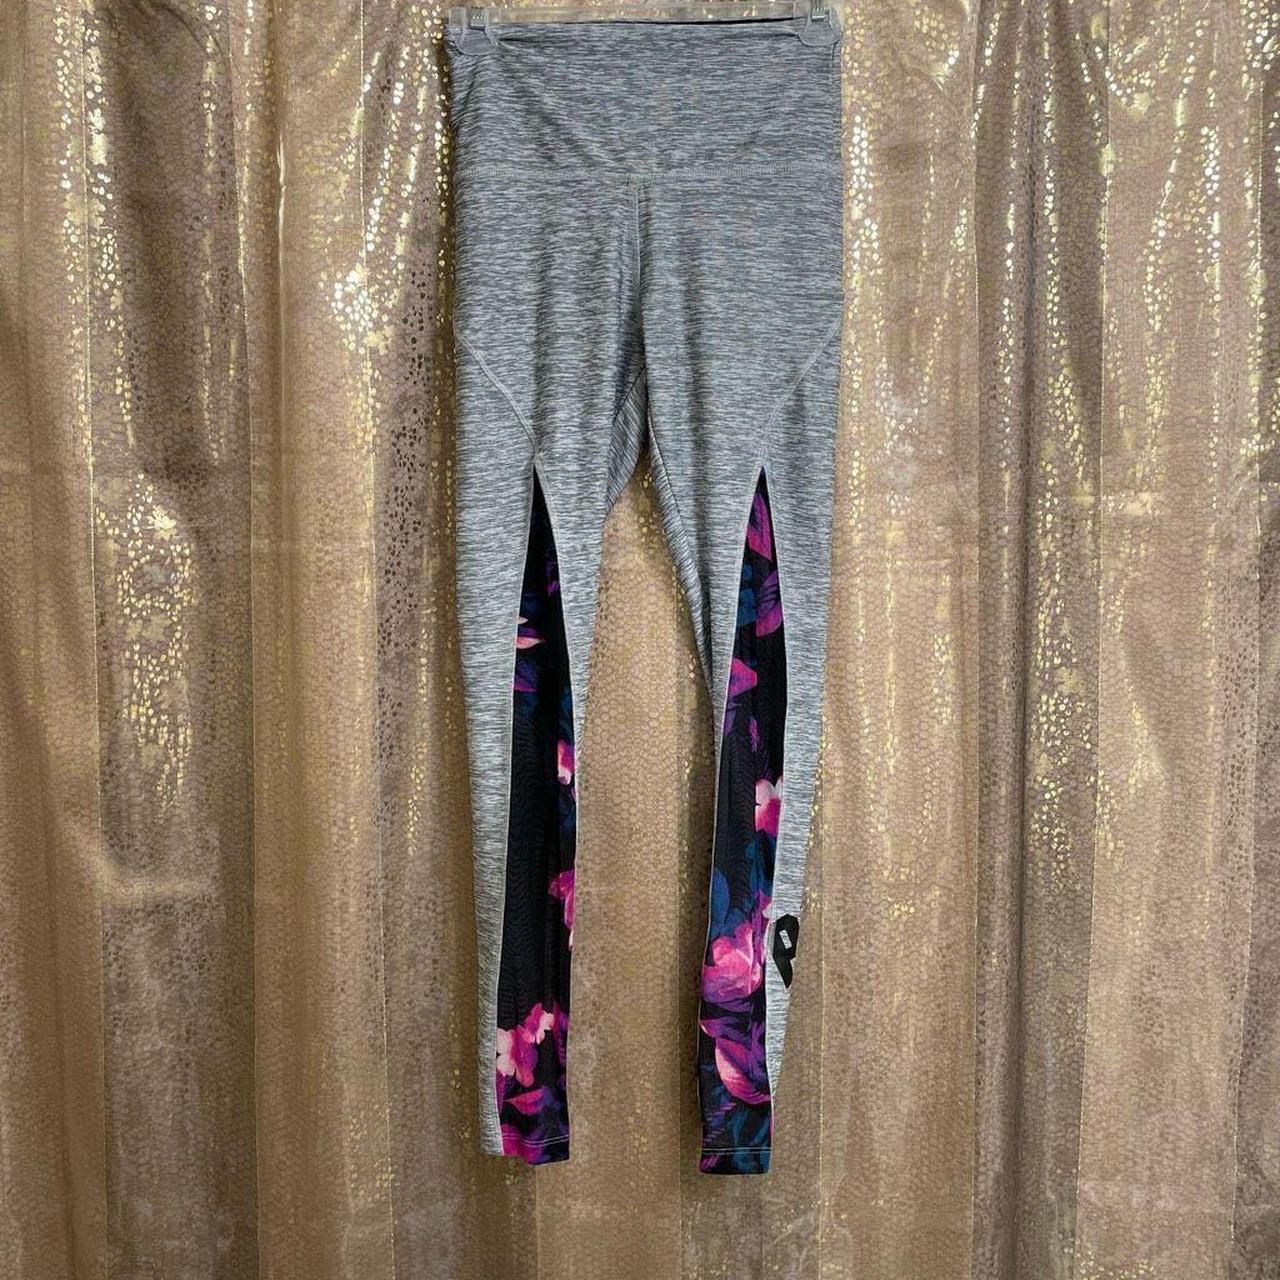 Victoria's Secret PINK floral yoga pants size - Depop